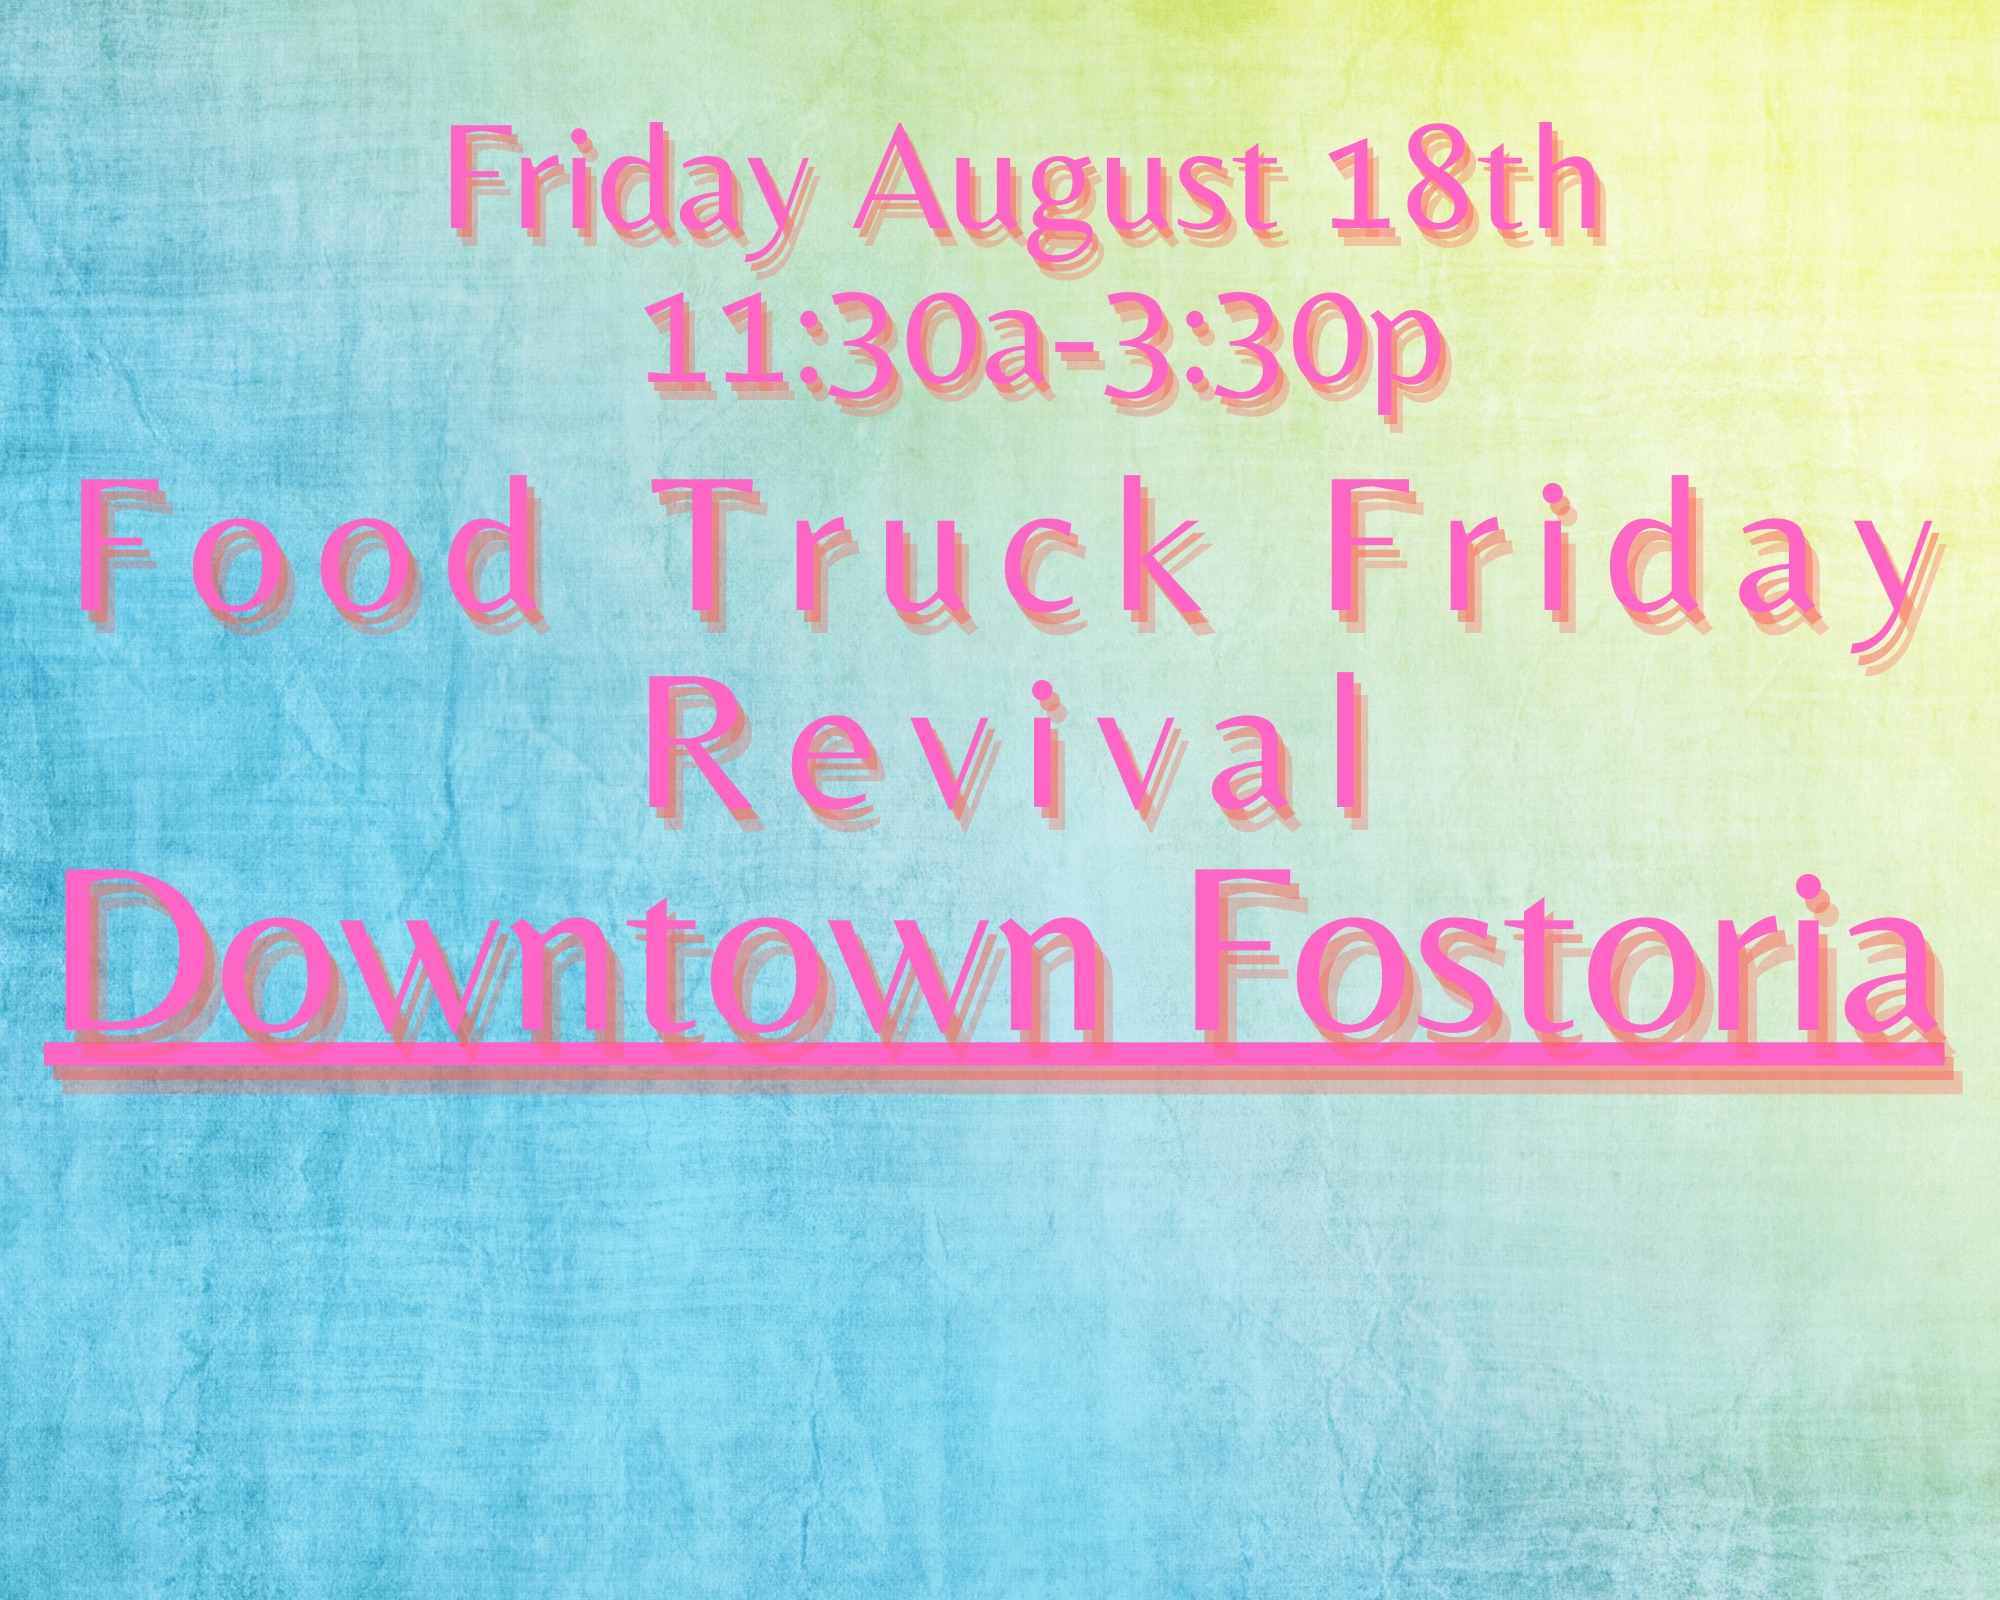 Food Truck Friday Revival